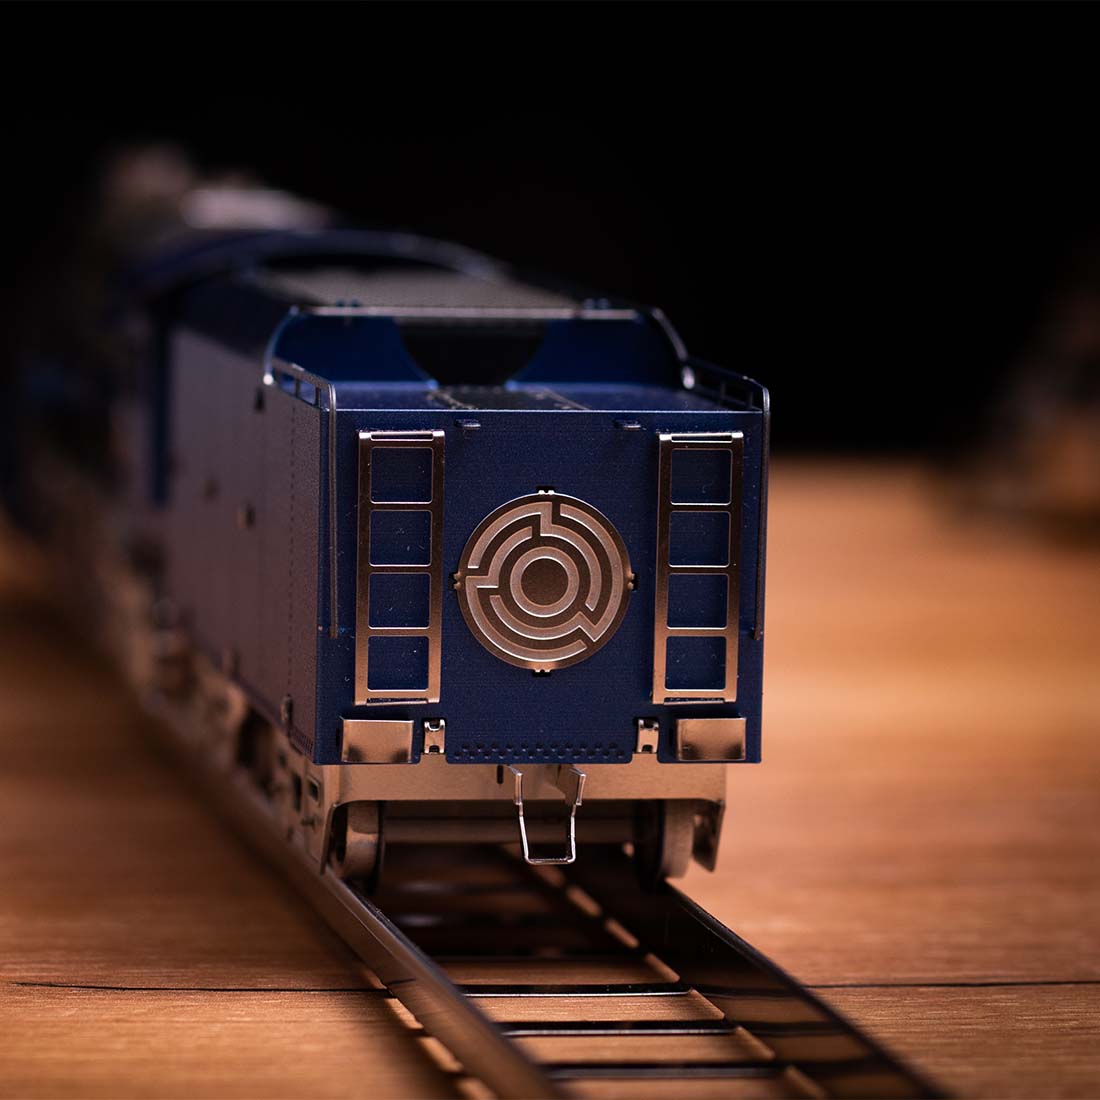 Mechanical Polar Steel Model Steam Train Ride Model DIY 3D Metal Puzzle Railway Assembly Kits